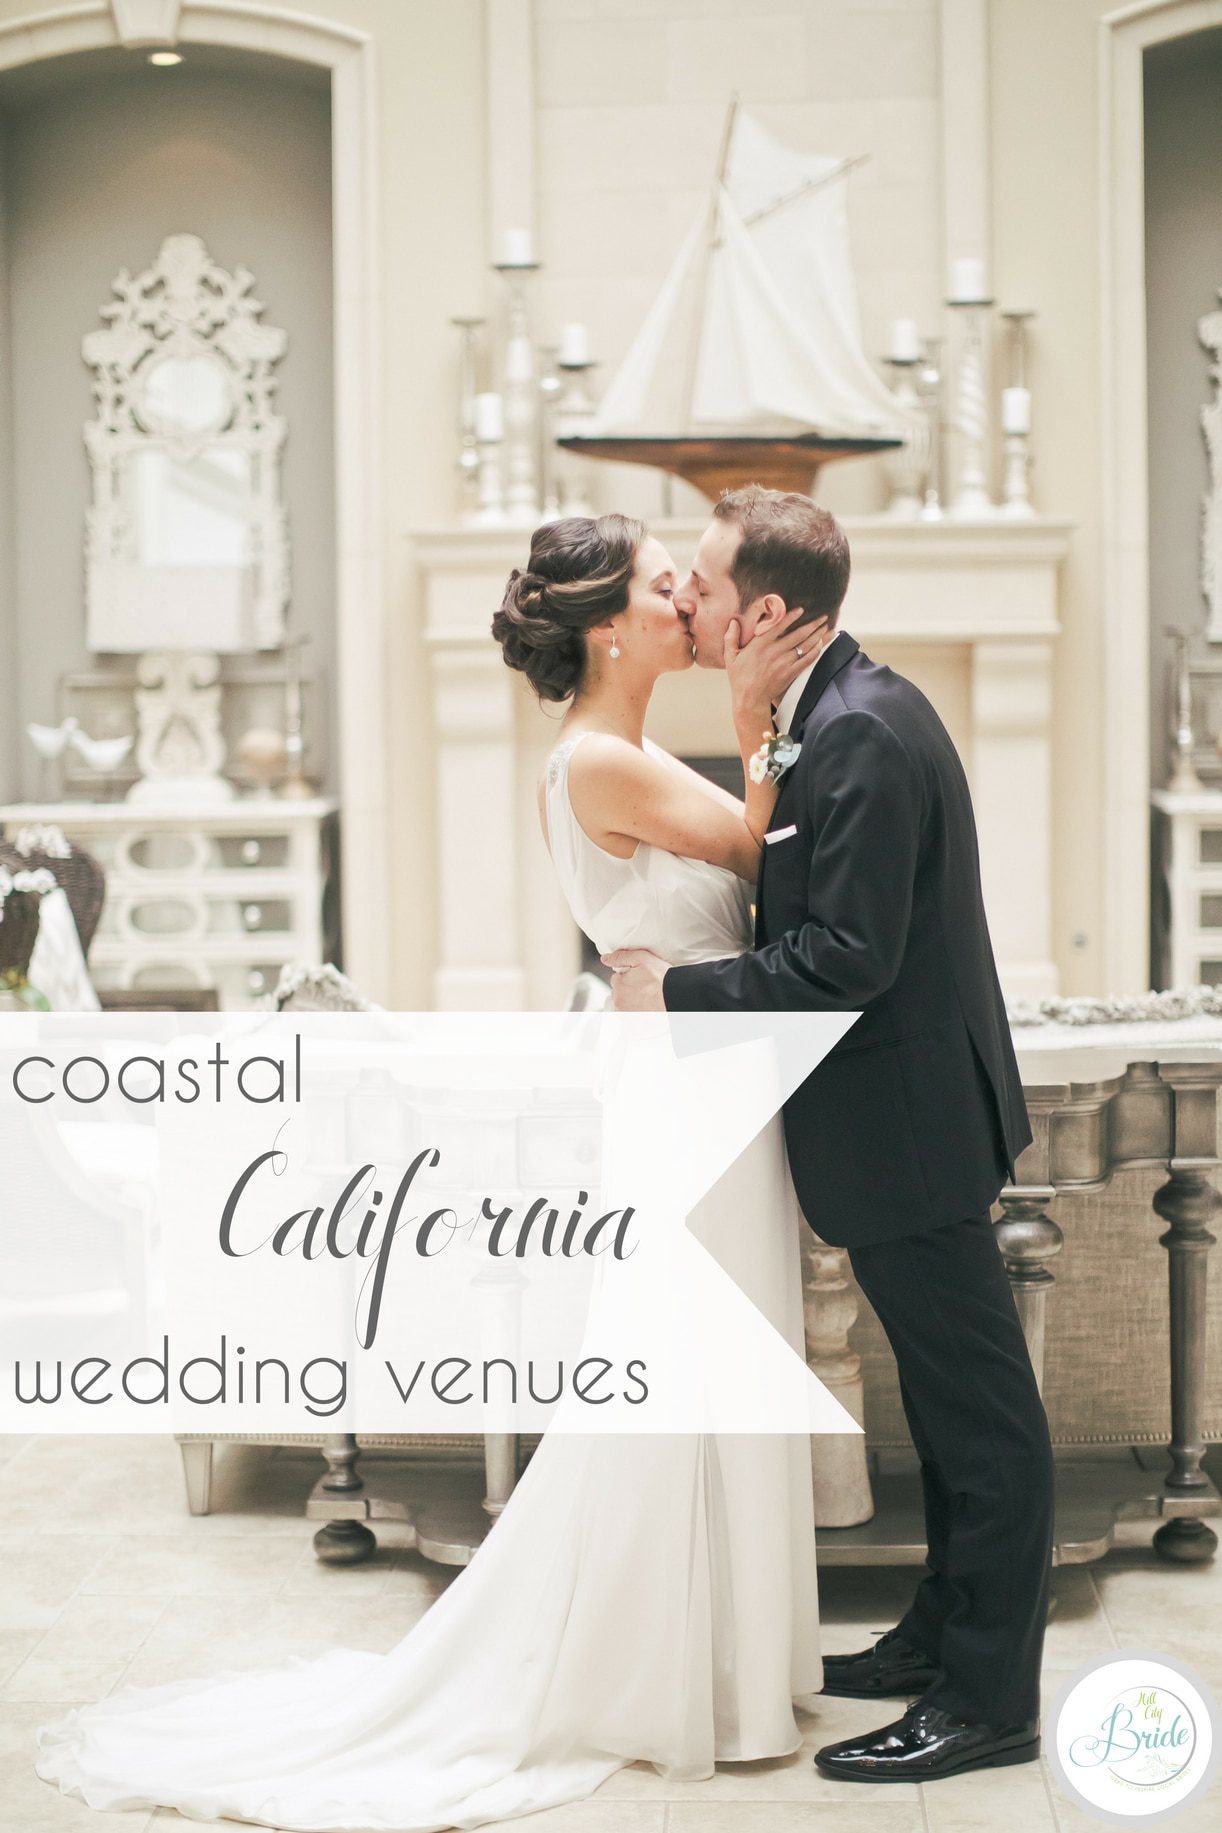 Coastal California Wedding Venues | Hill City Bride Destination Wedding Blog